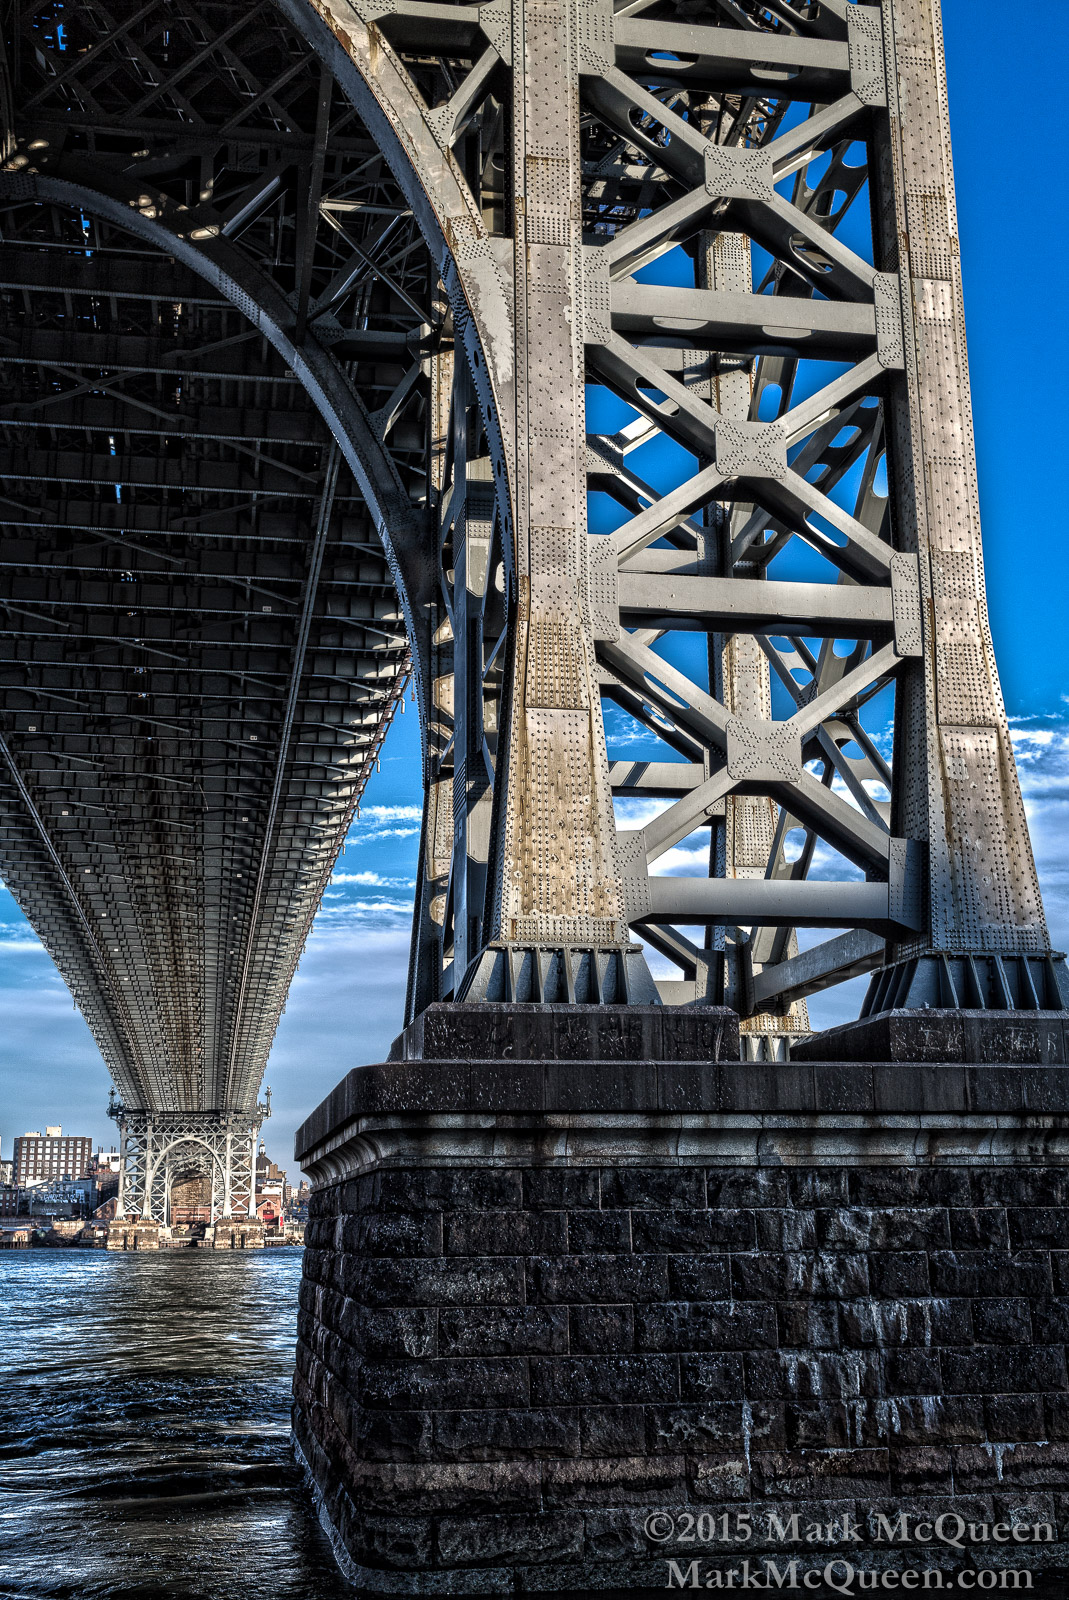 The Bridges of Manhattan County: Williamsburg